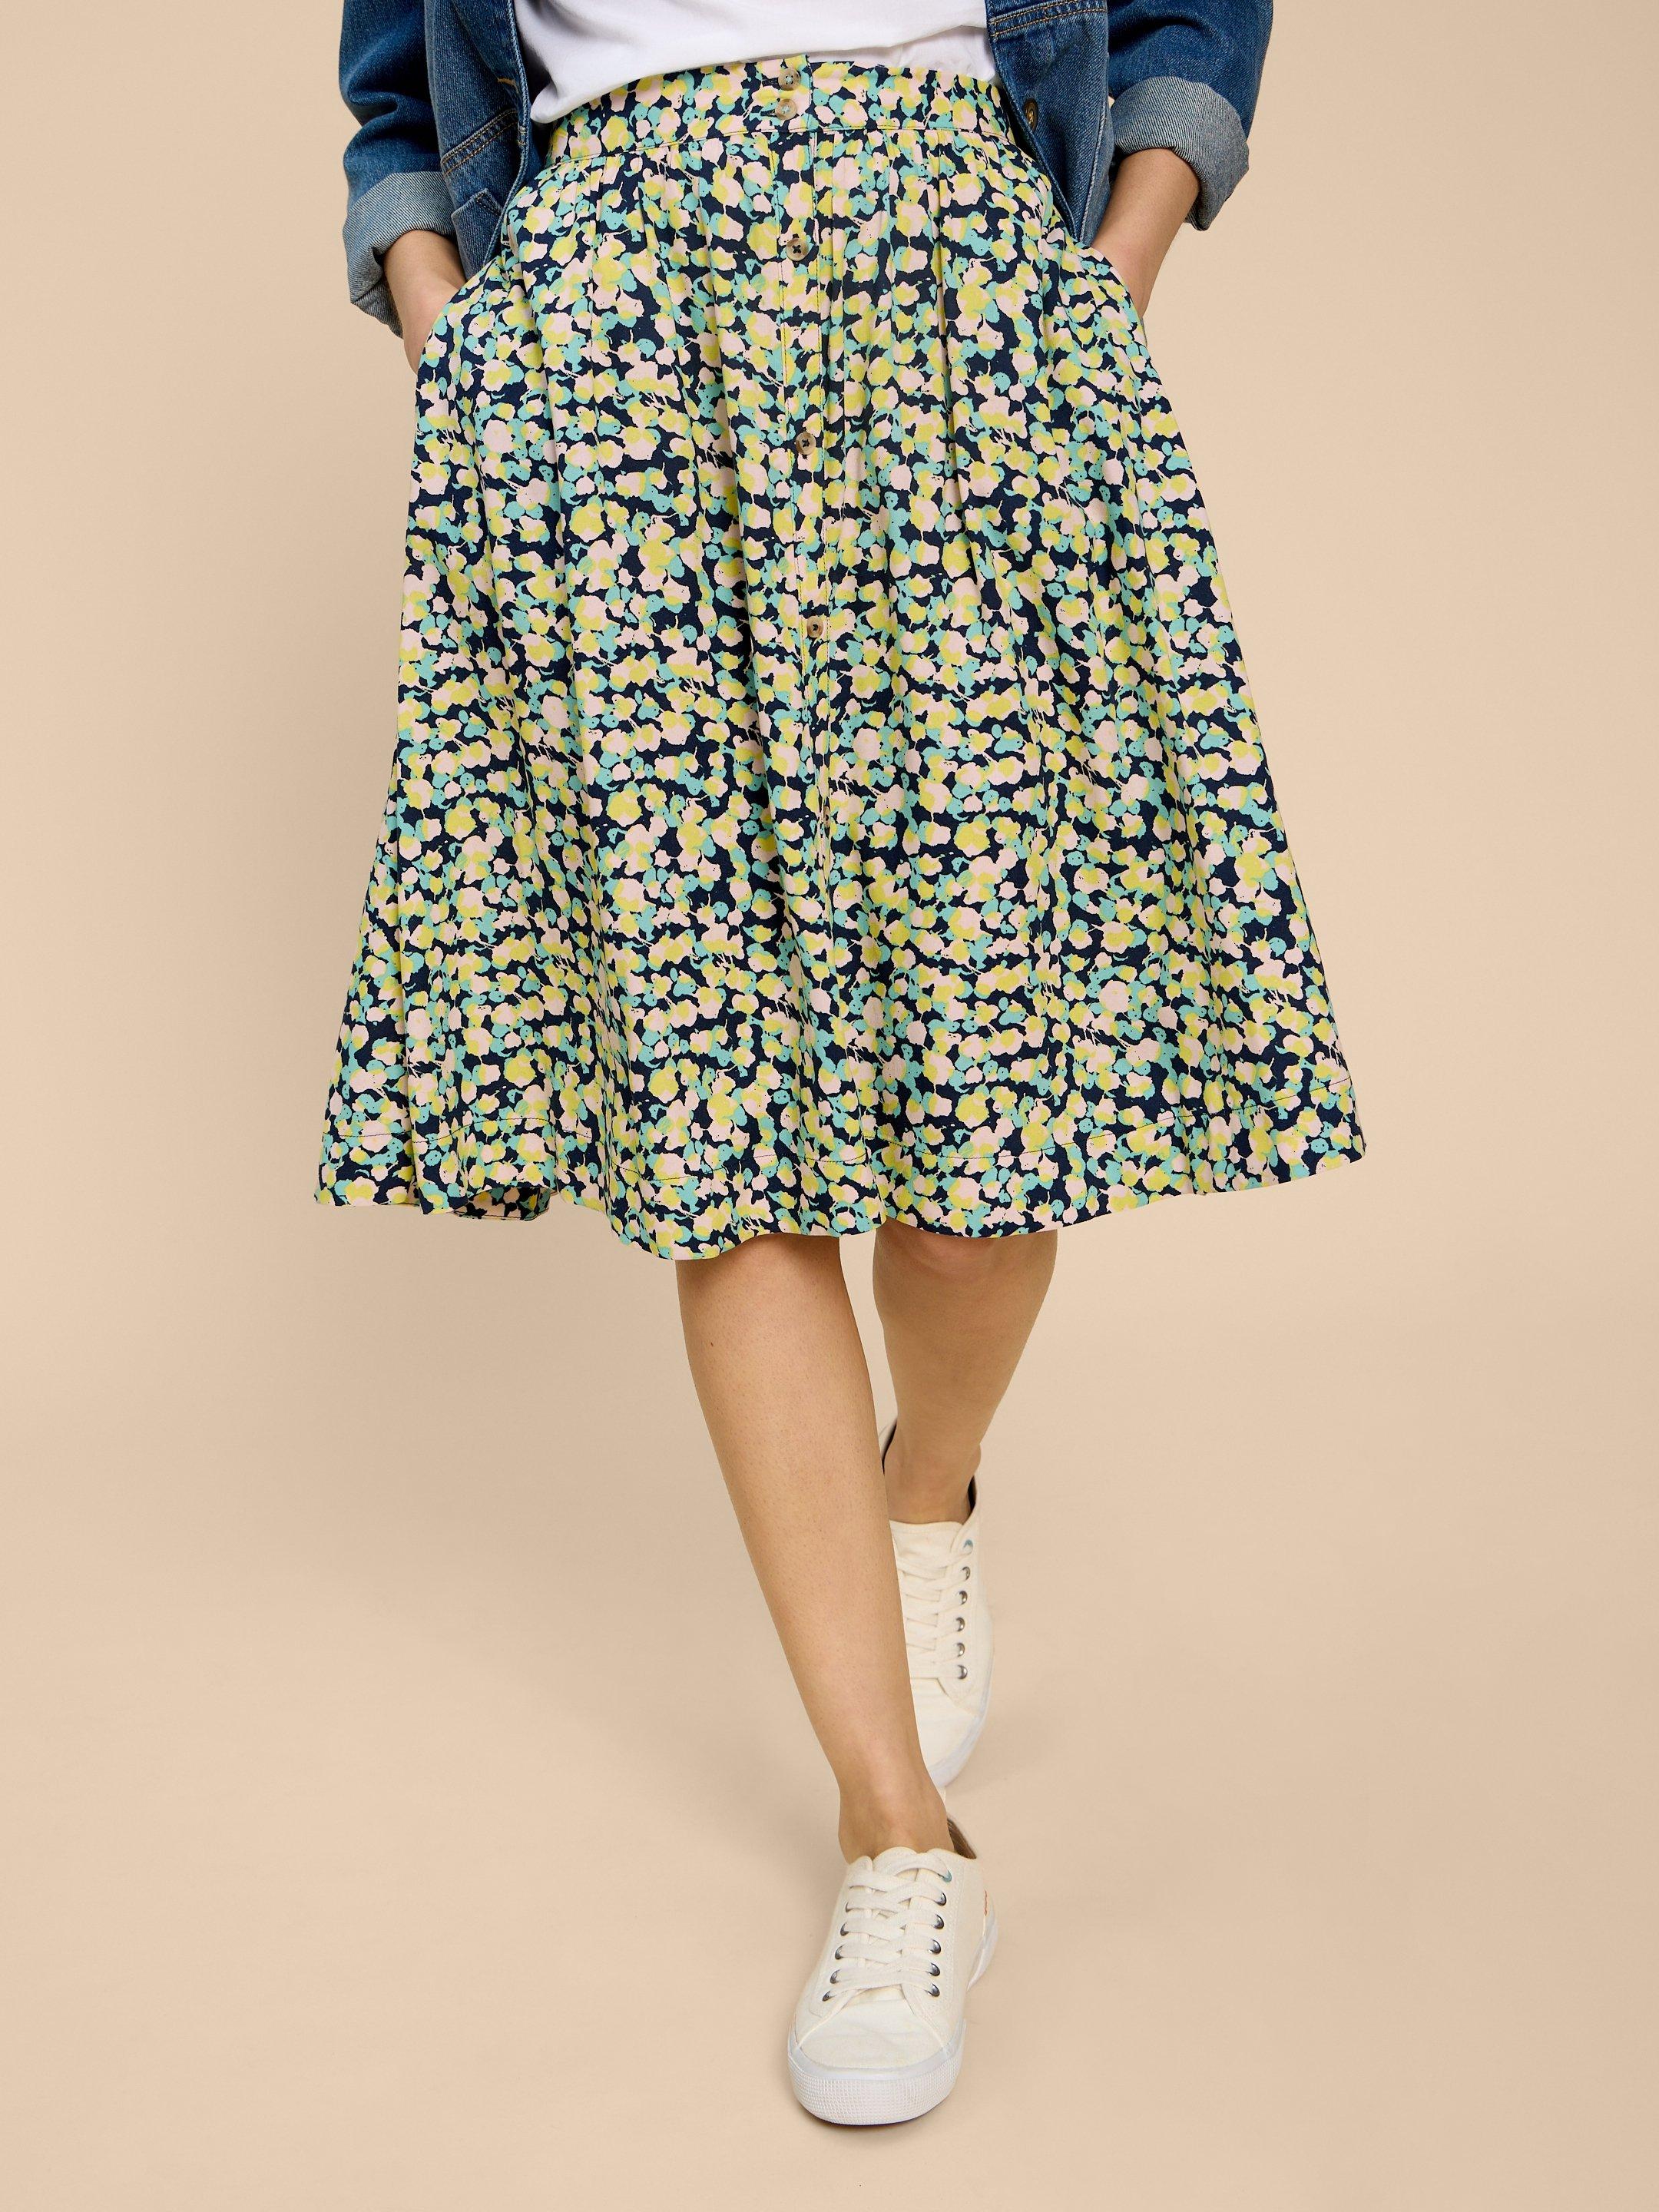 Sarah Eco Vero Knee Skirt in NAVY PR - MODEL DETAIL